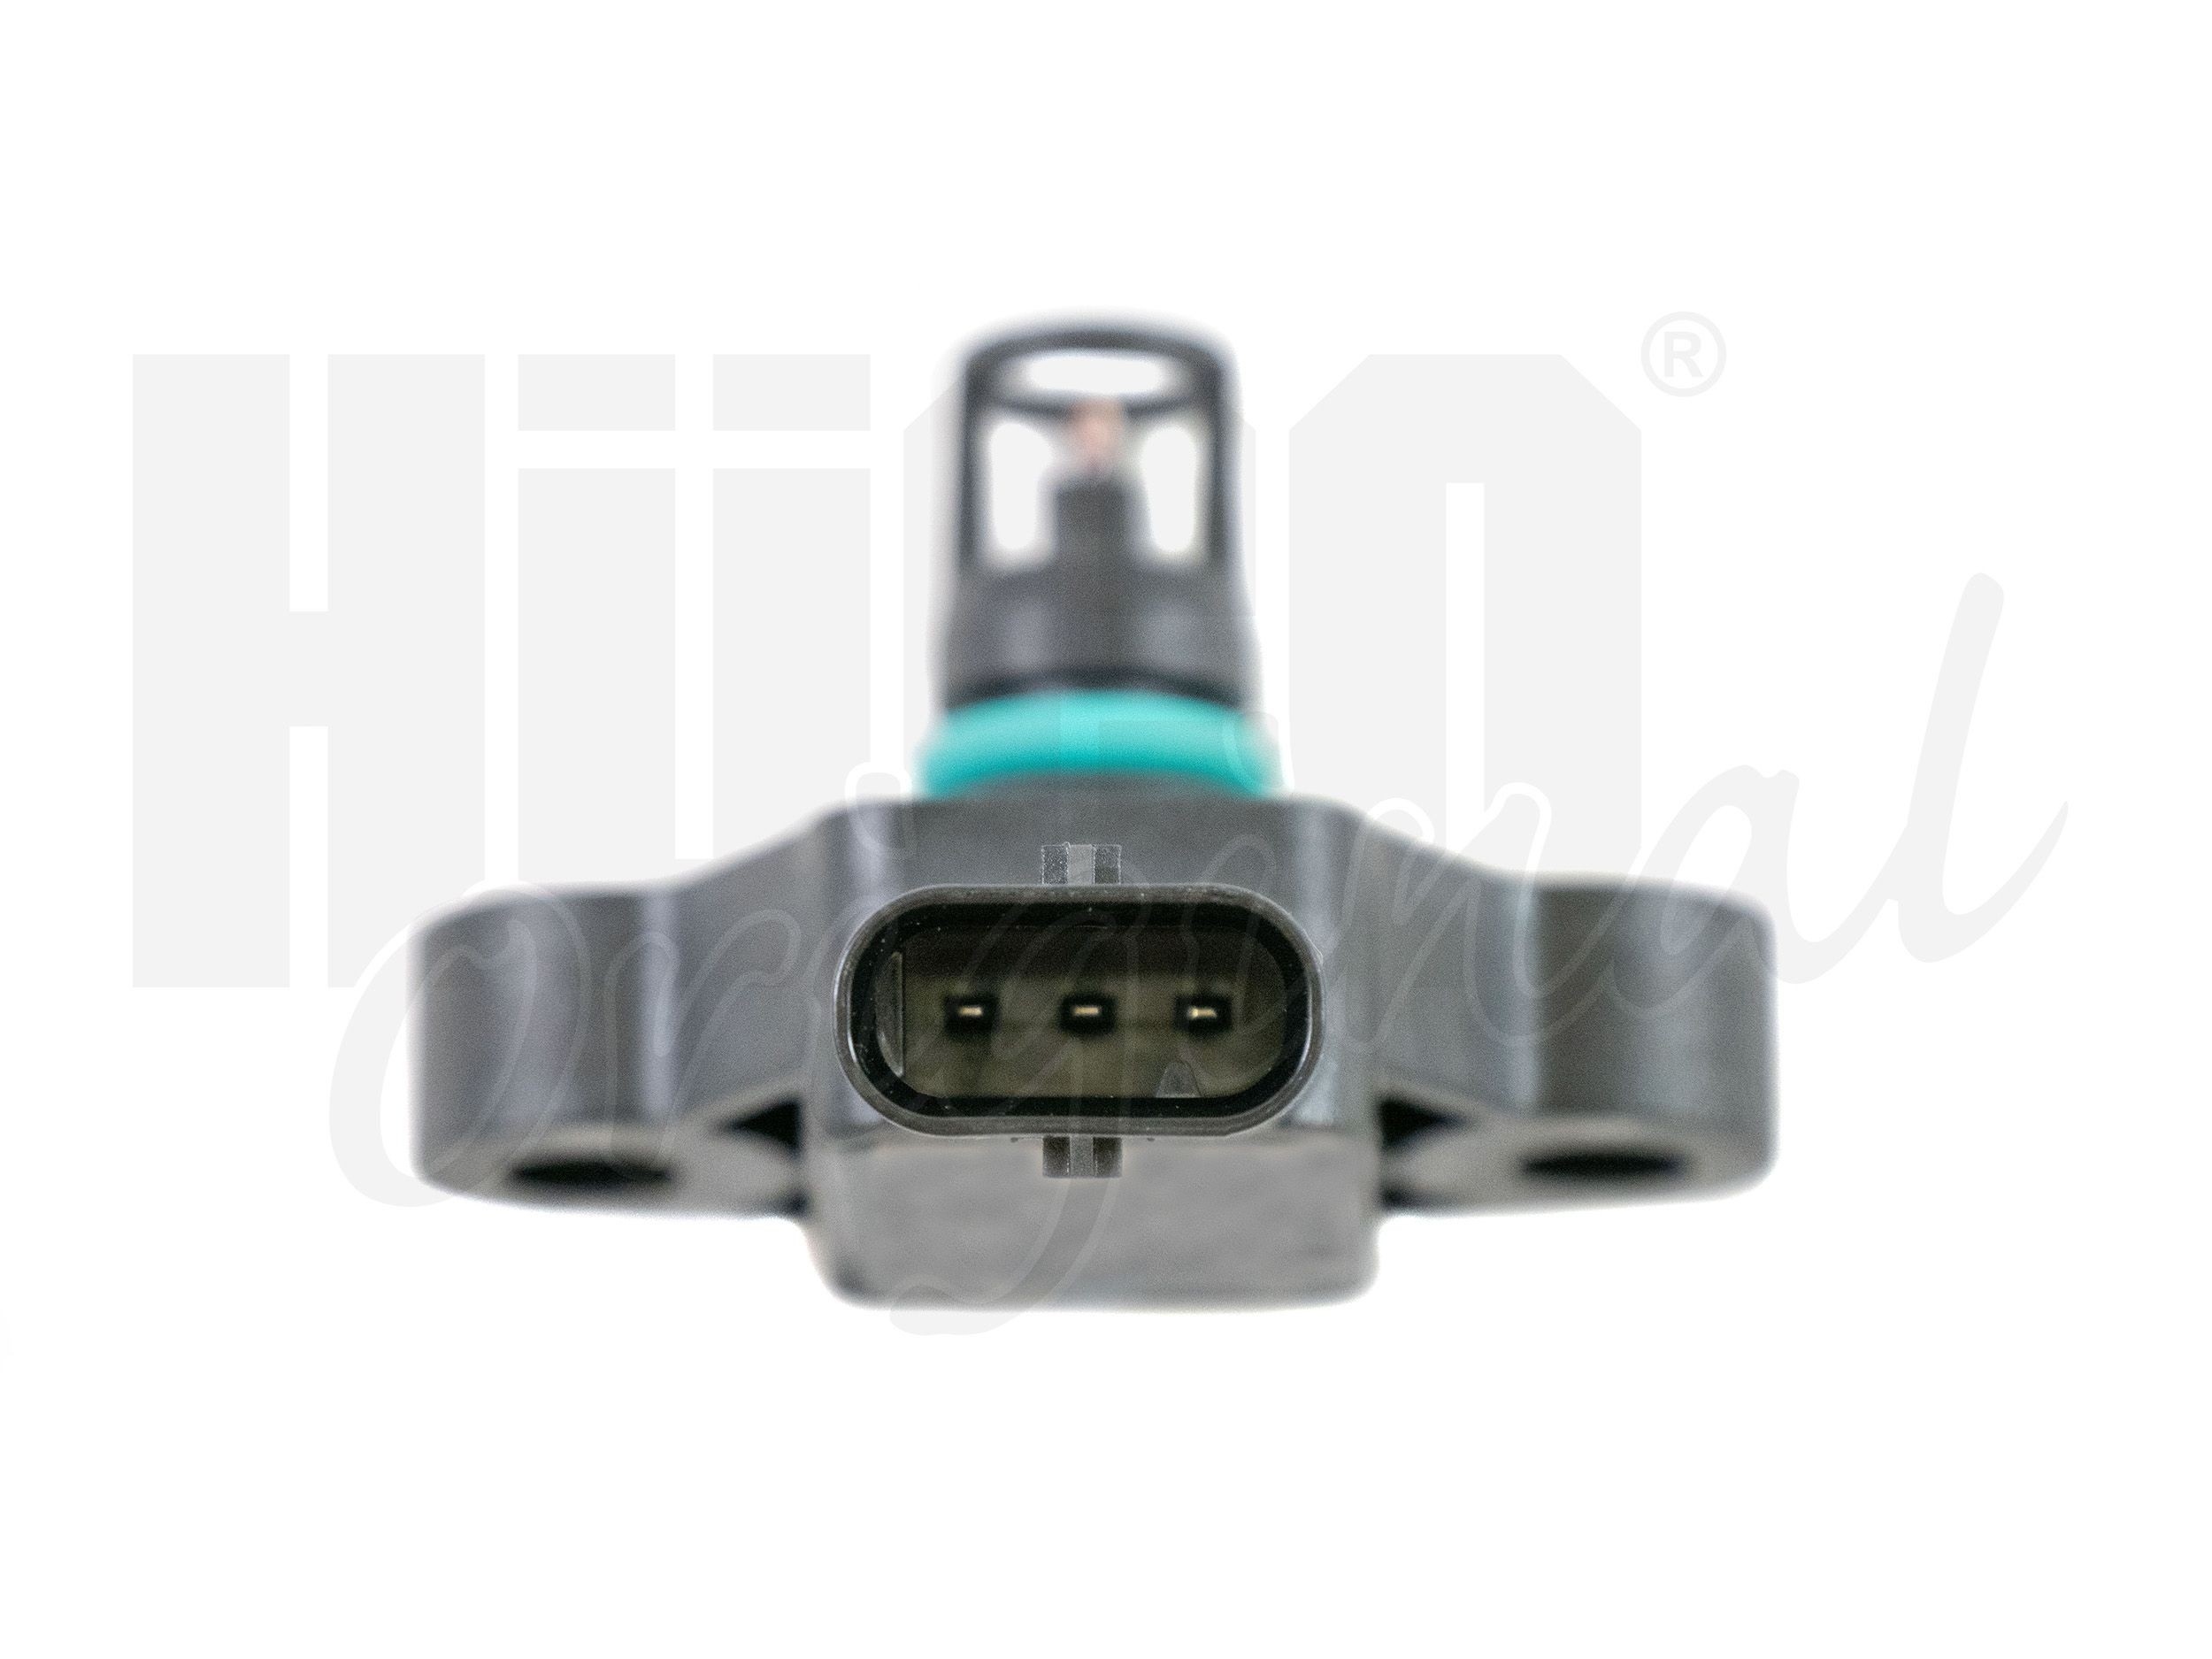 138252 Manifold pressure sensor Hueco HITACHI 138252 review and test